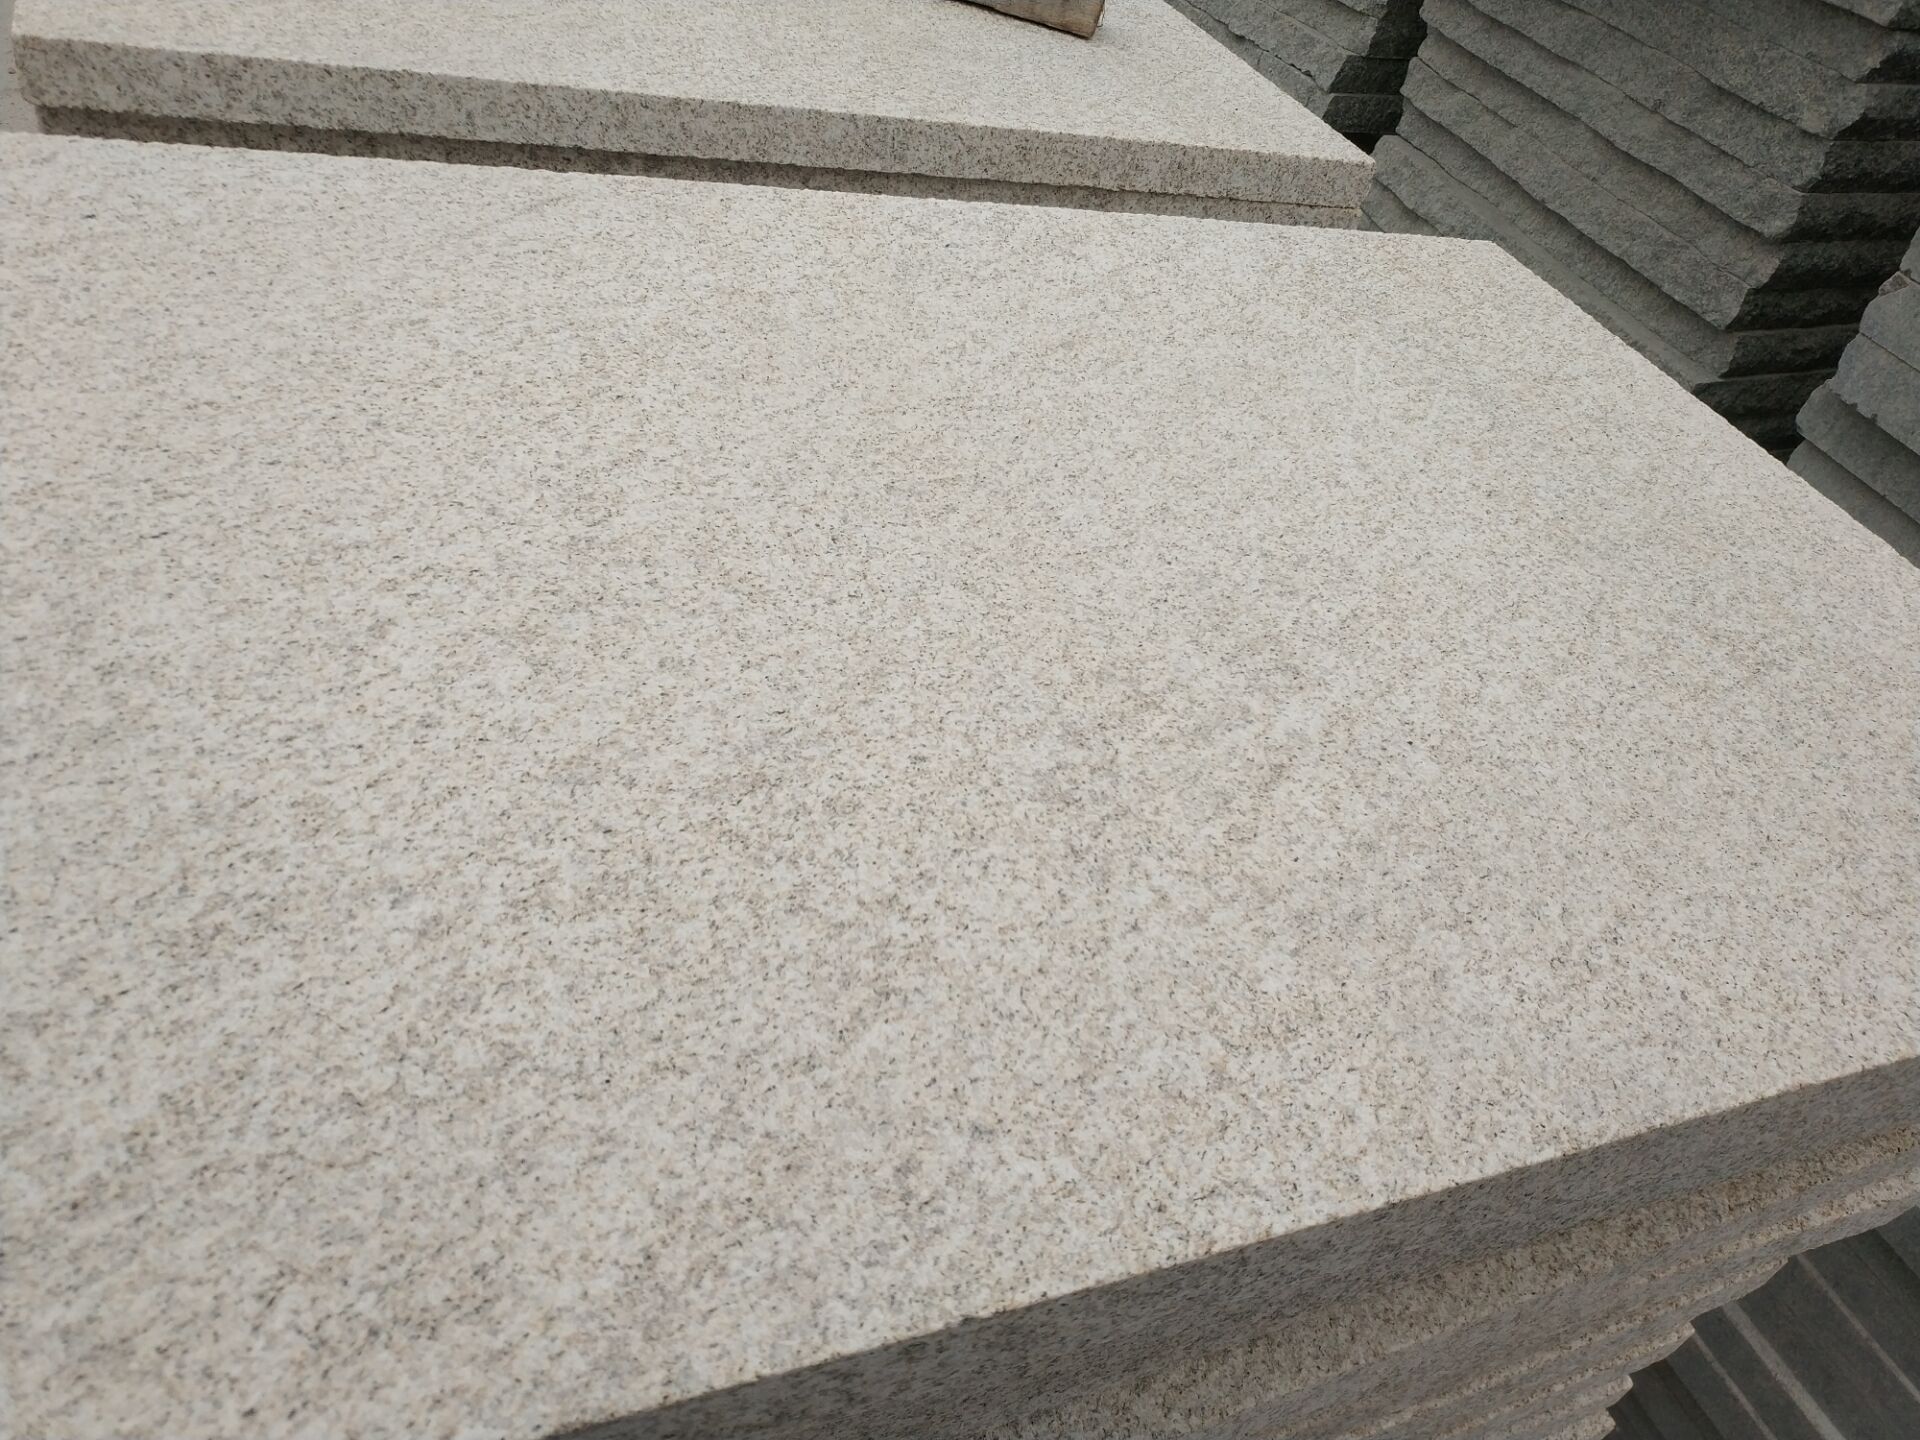 G350 Yellow Granite Slabs Granite Wall Clading High Quality